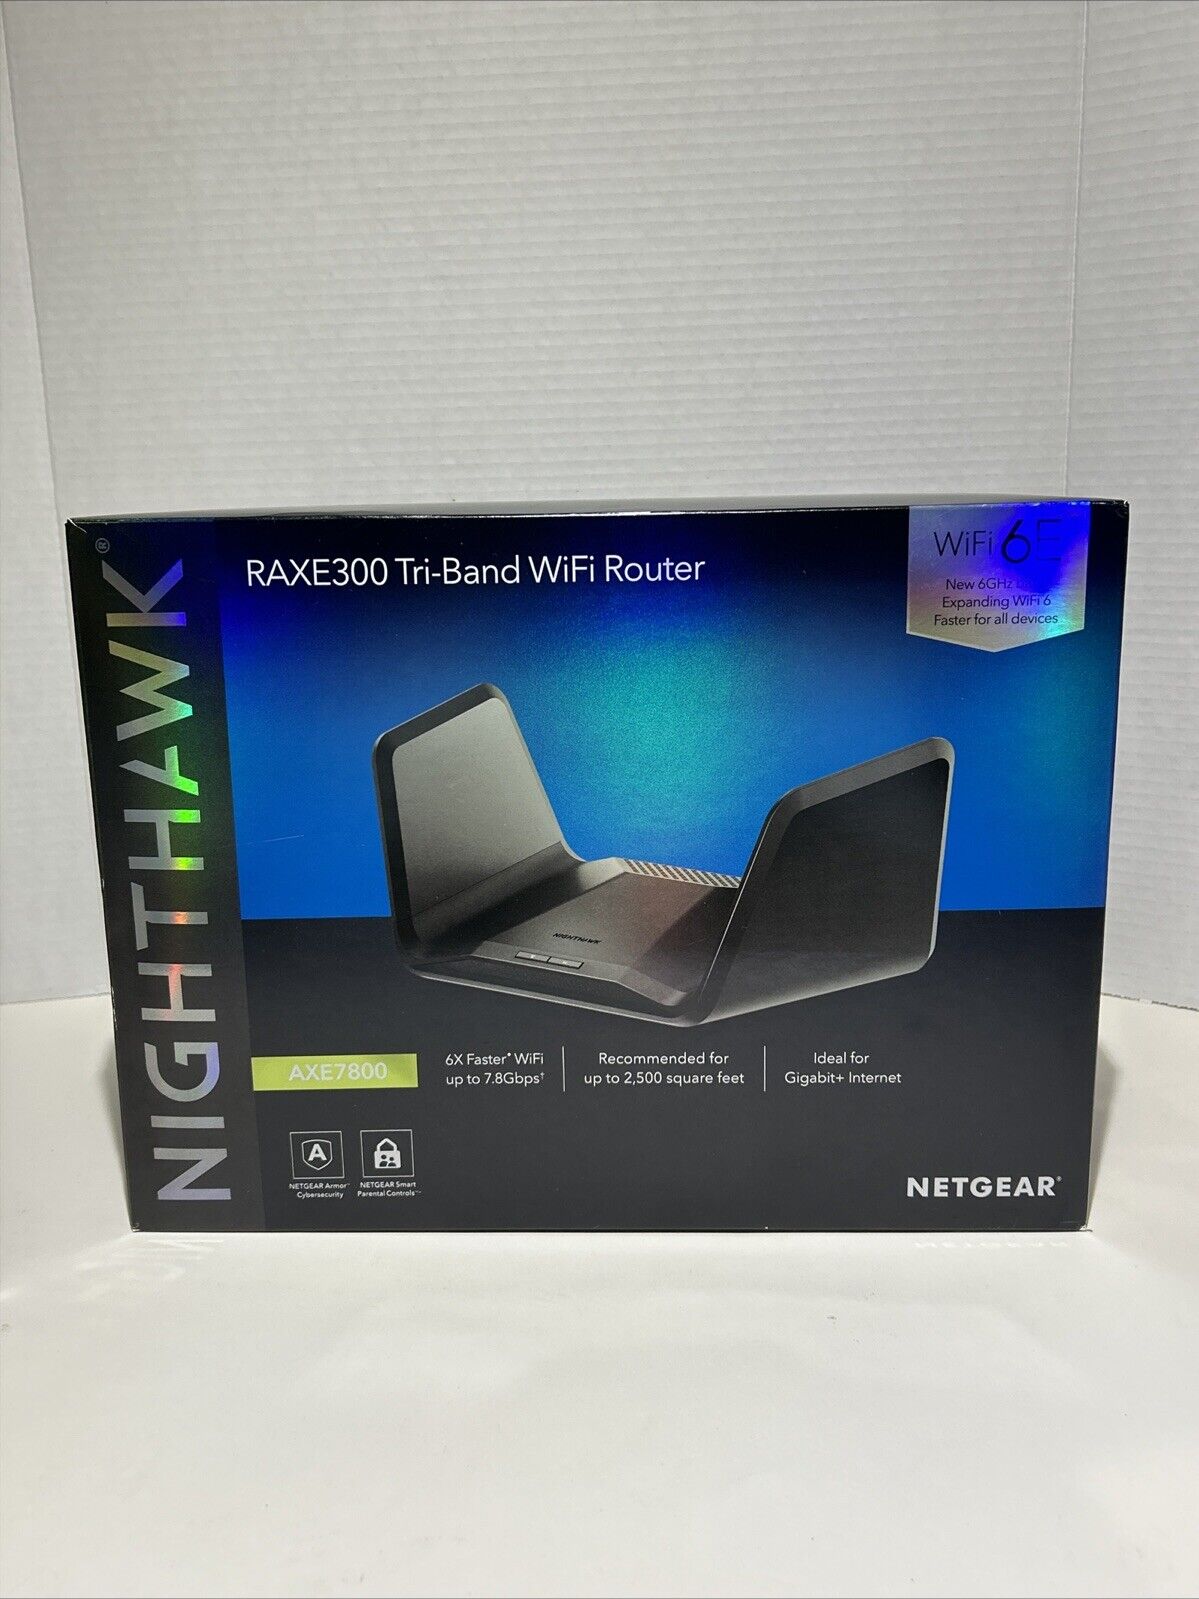 Netgear AXE7800 Nighthawk RAXE300 Tri-Band WiFi 6E Router Black Used